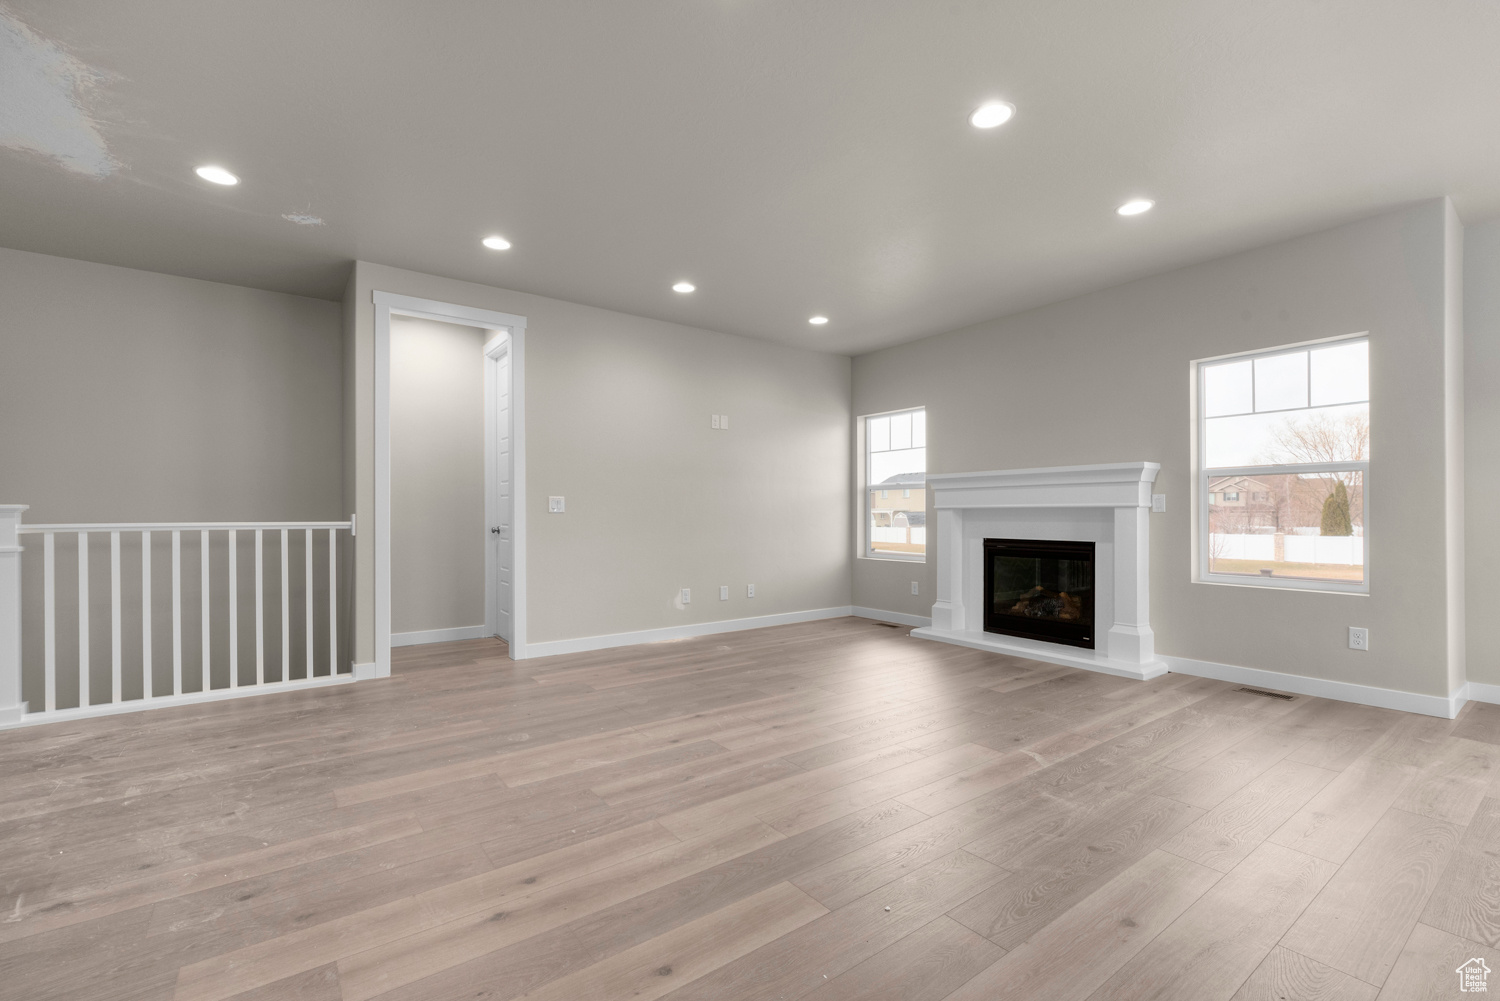 Unfurnished living room featuring light hardwood / wood-style floors